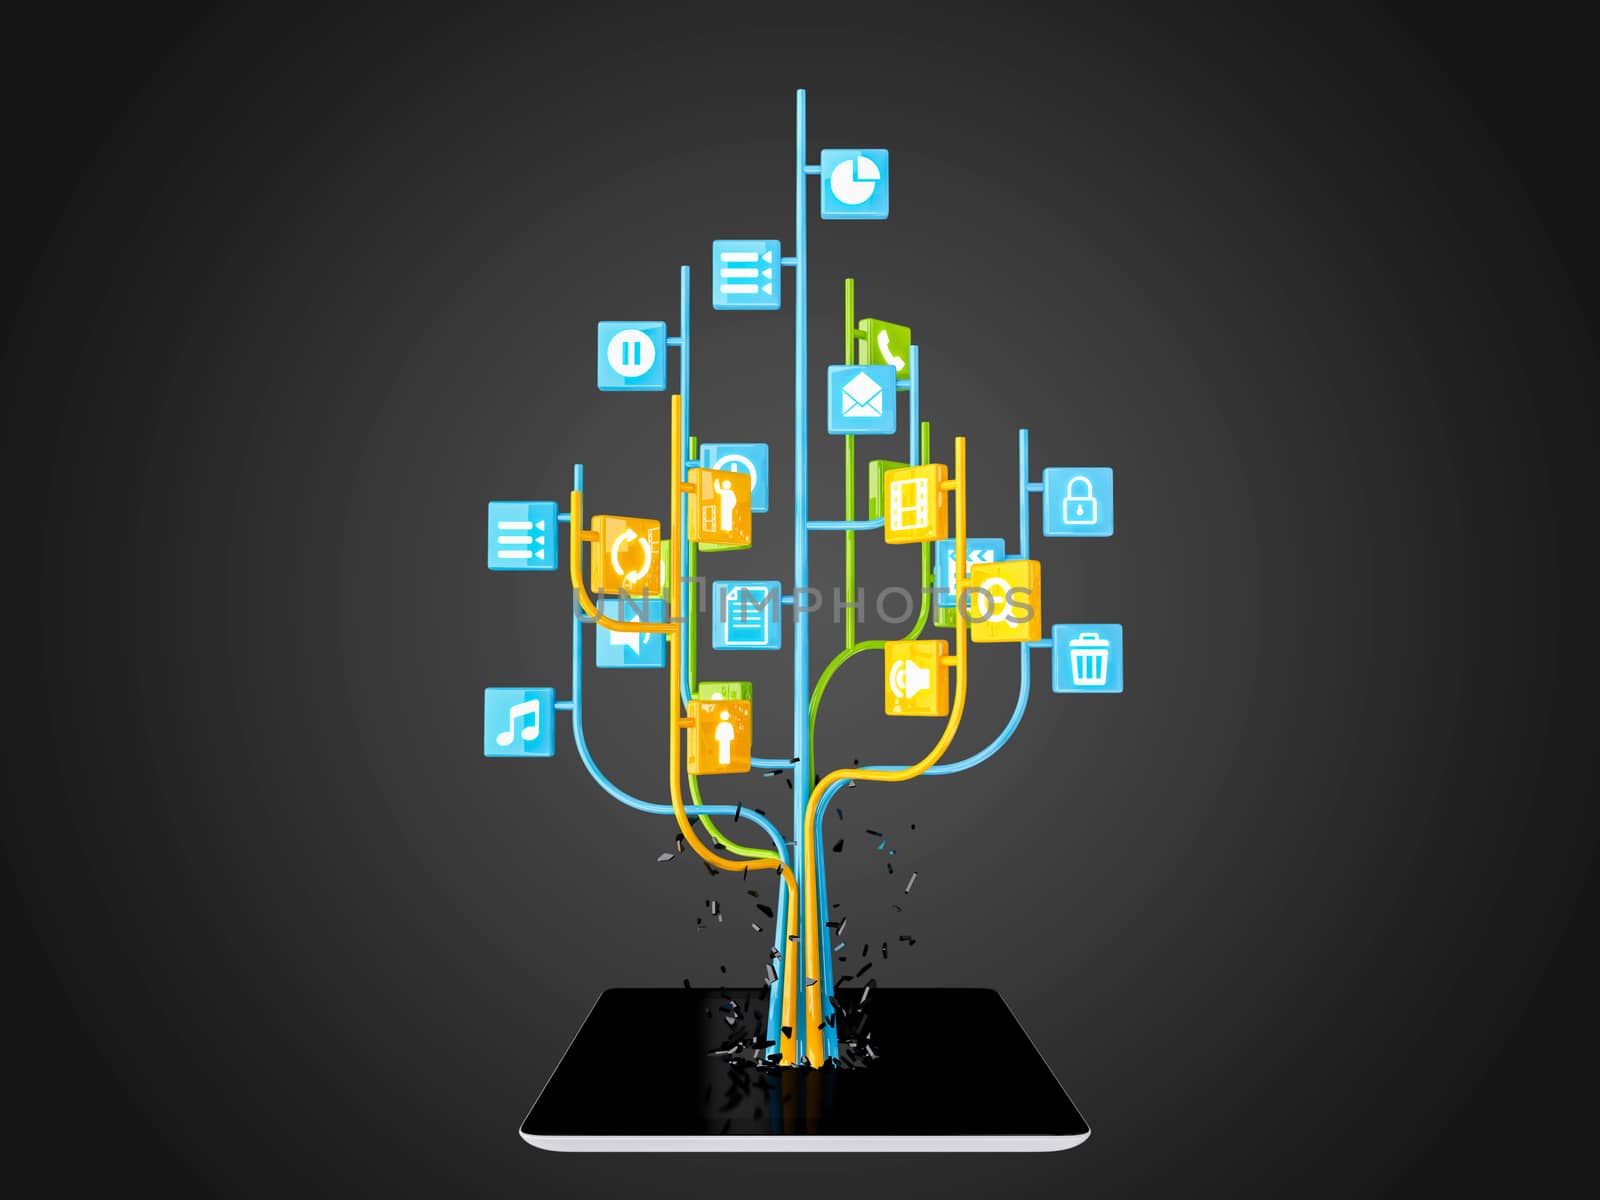 Social media icons set in tree shape on Modern black tablet pc by teerawit